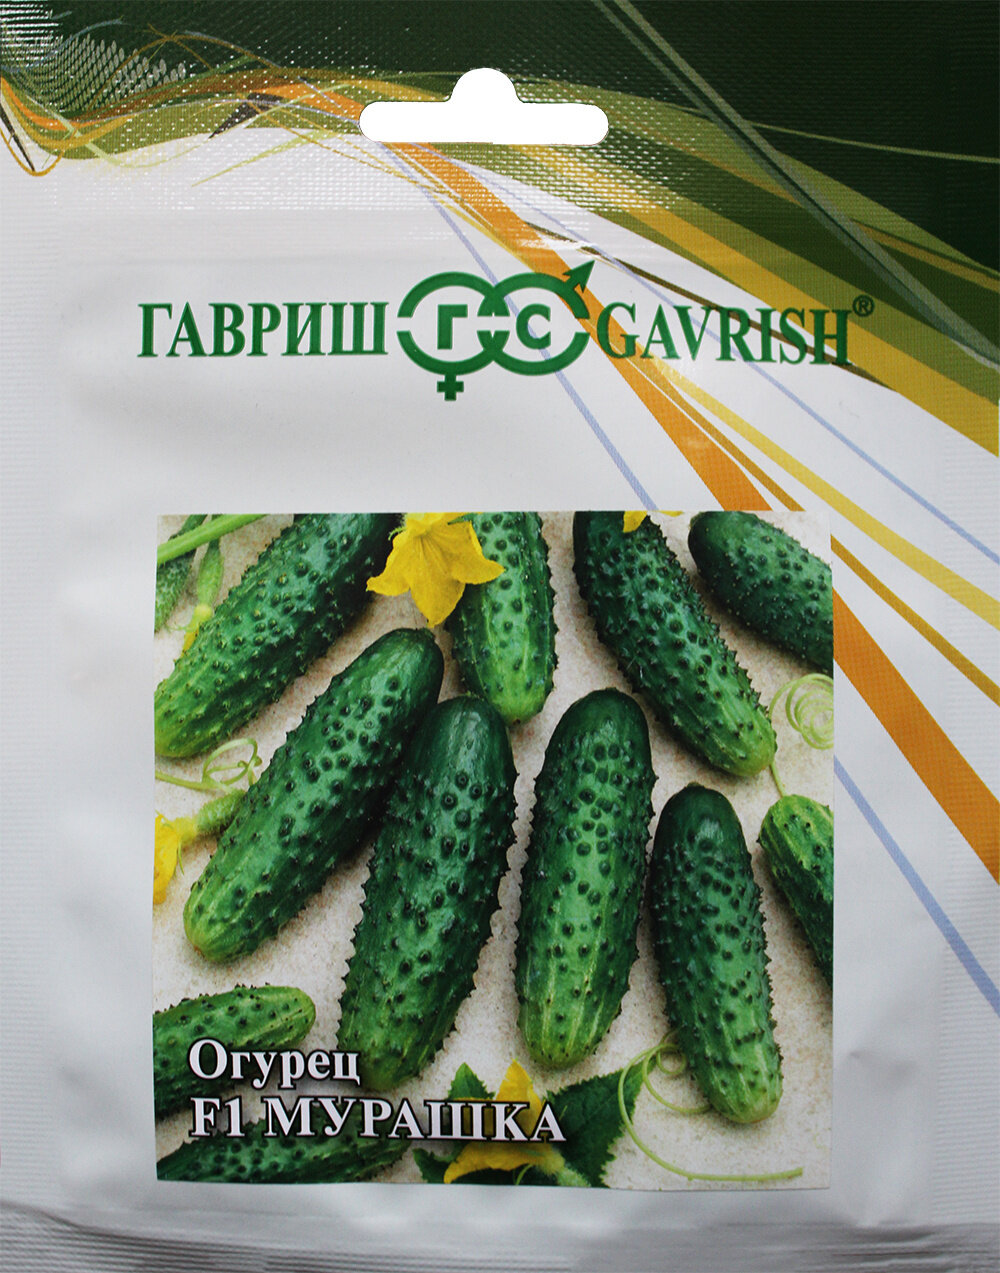 Семена Гавриш/Семена для фермера Огурец Мурашка F1 корнишон 100 семян в наборе